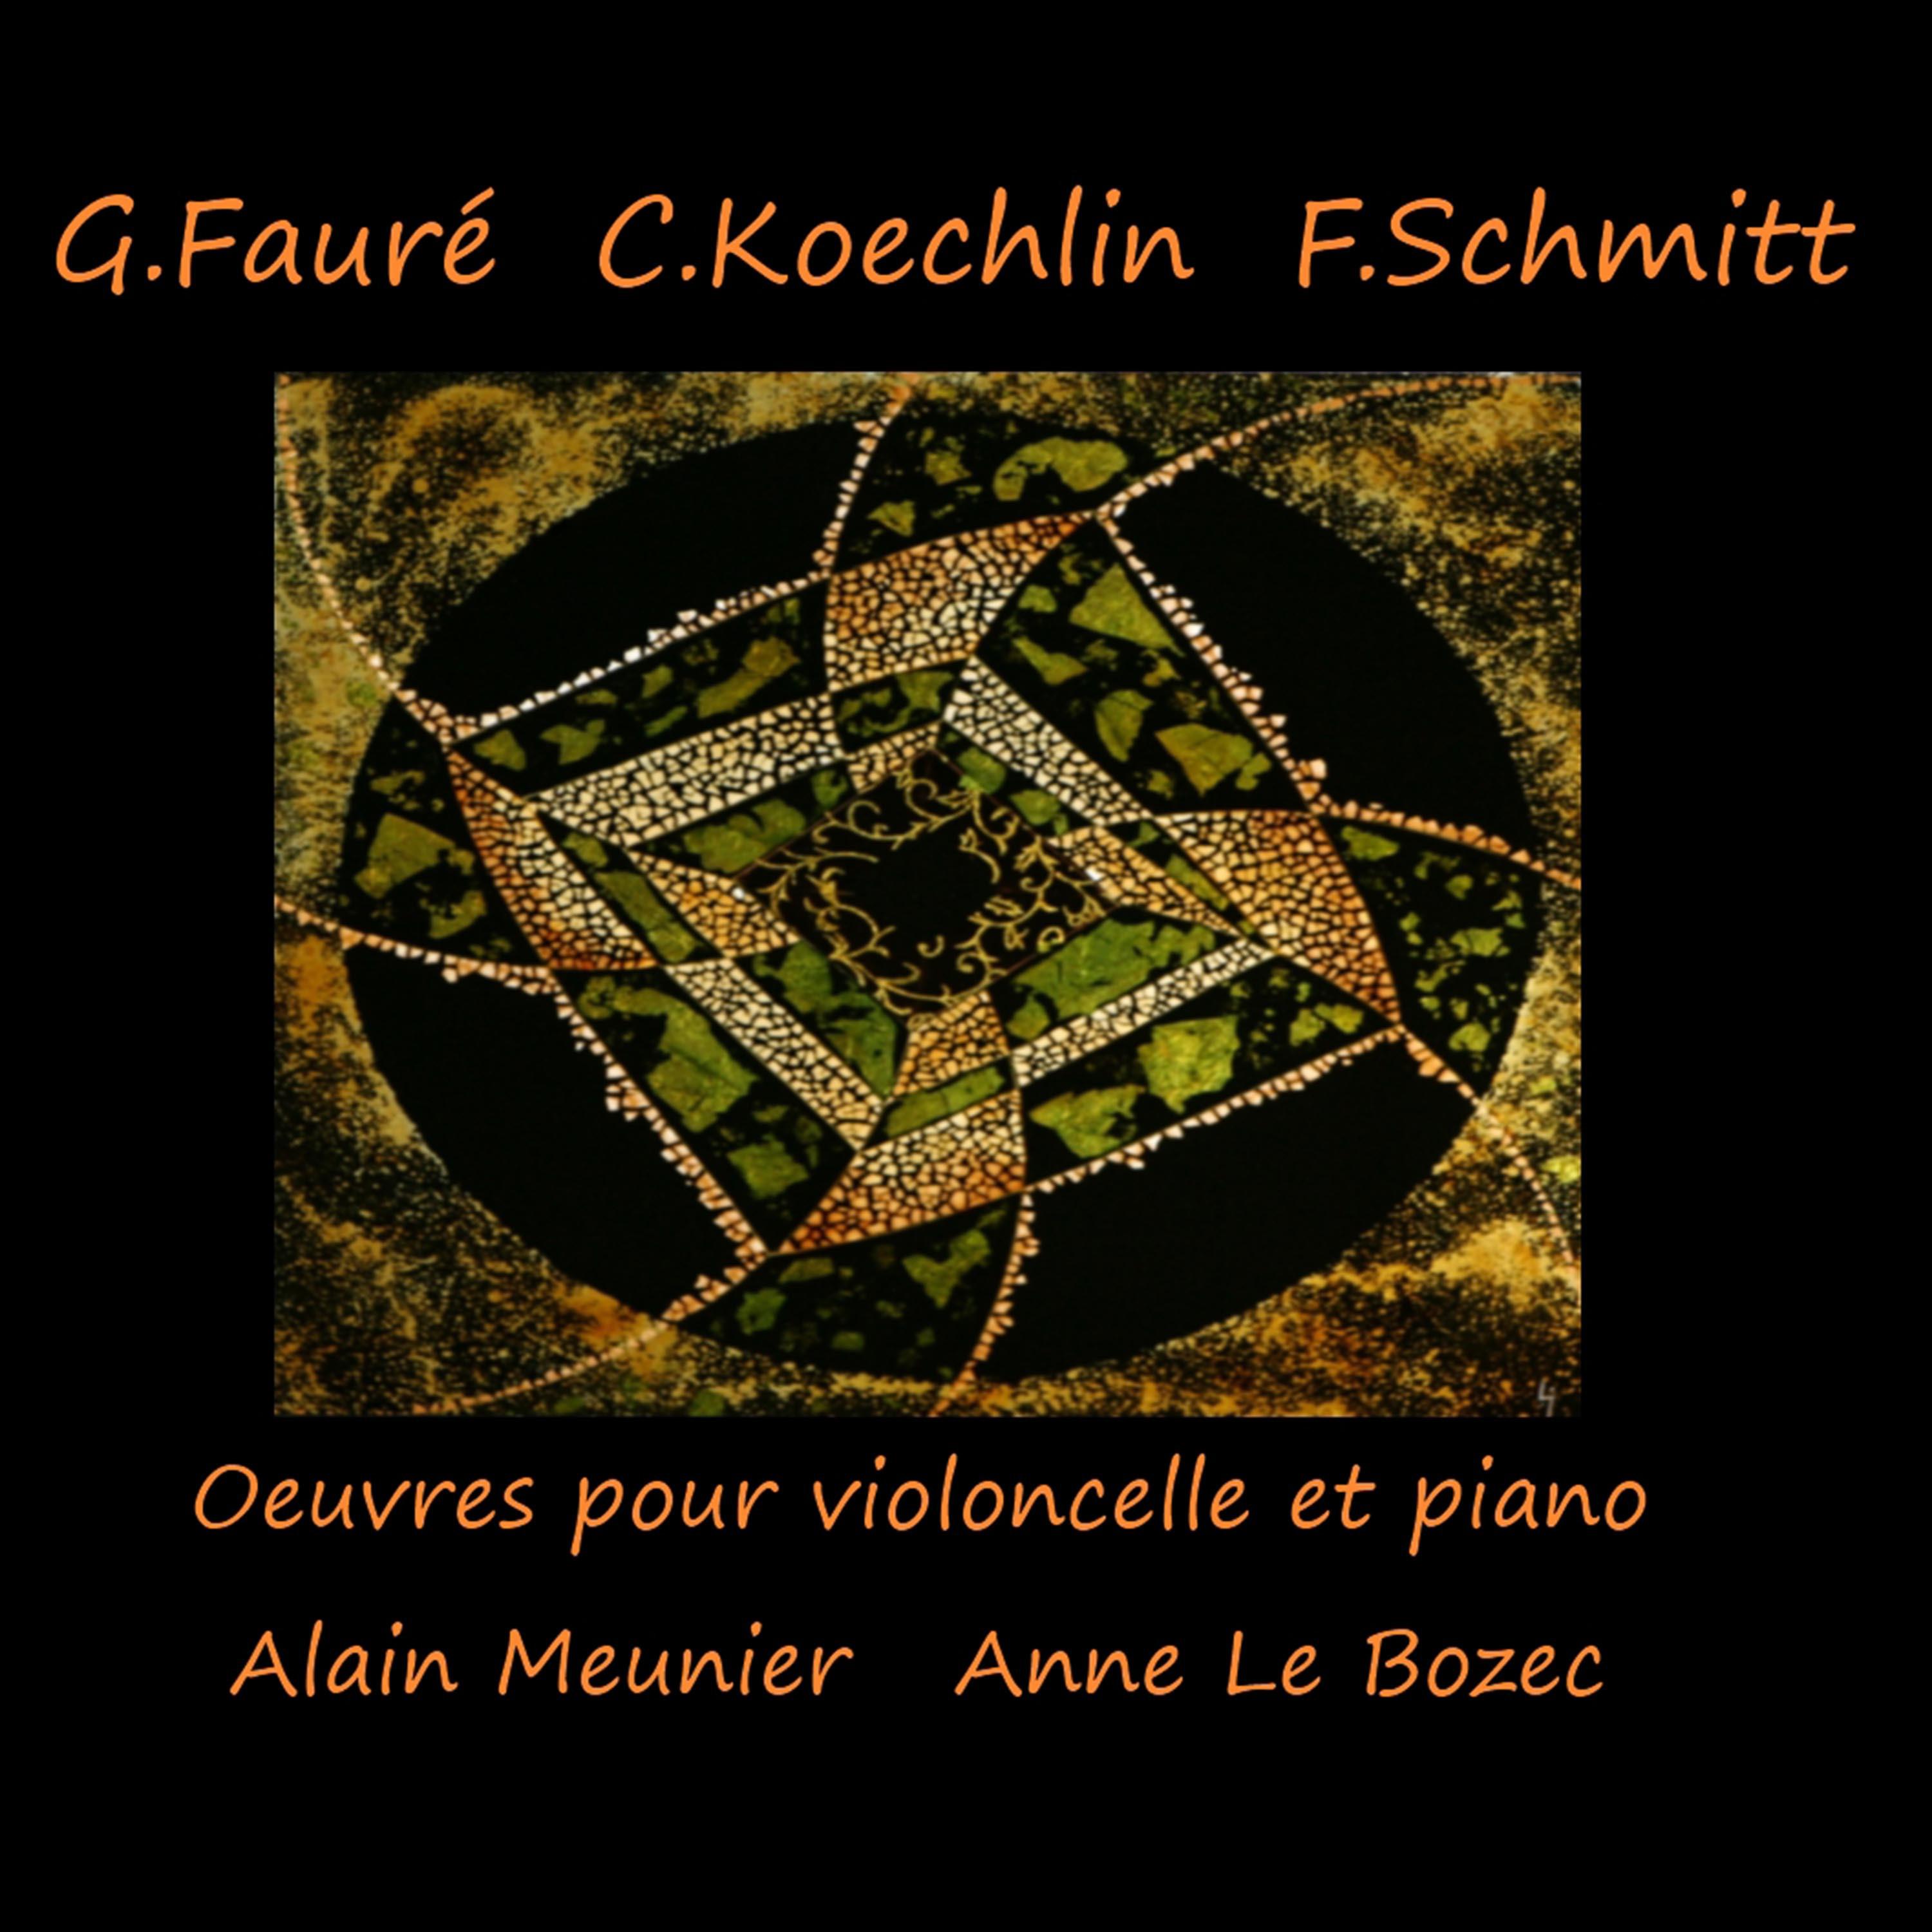 Sonate pour violoncelle et piano en Ut Majeur, Op. 66: II. Andante quasi adagio